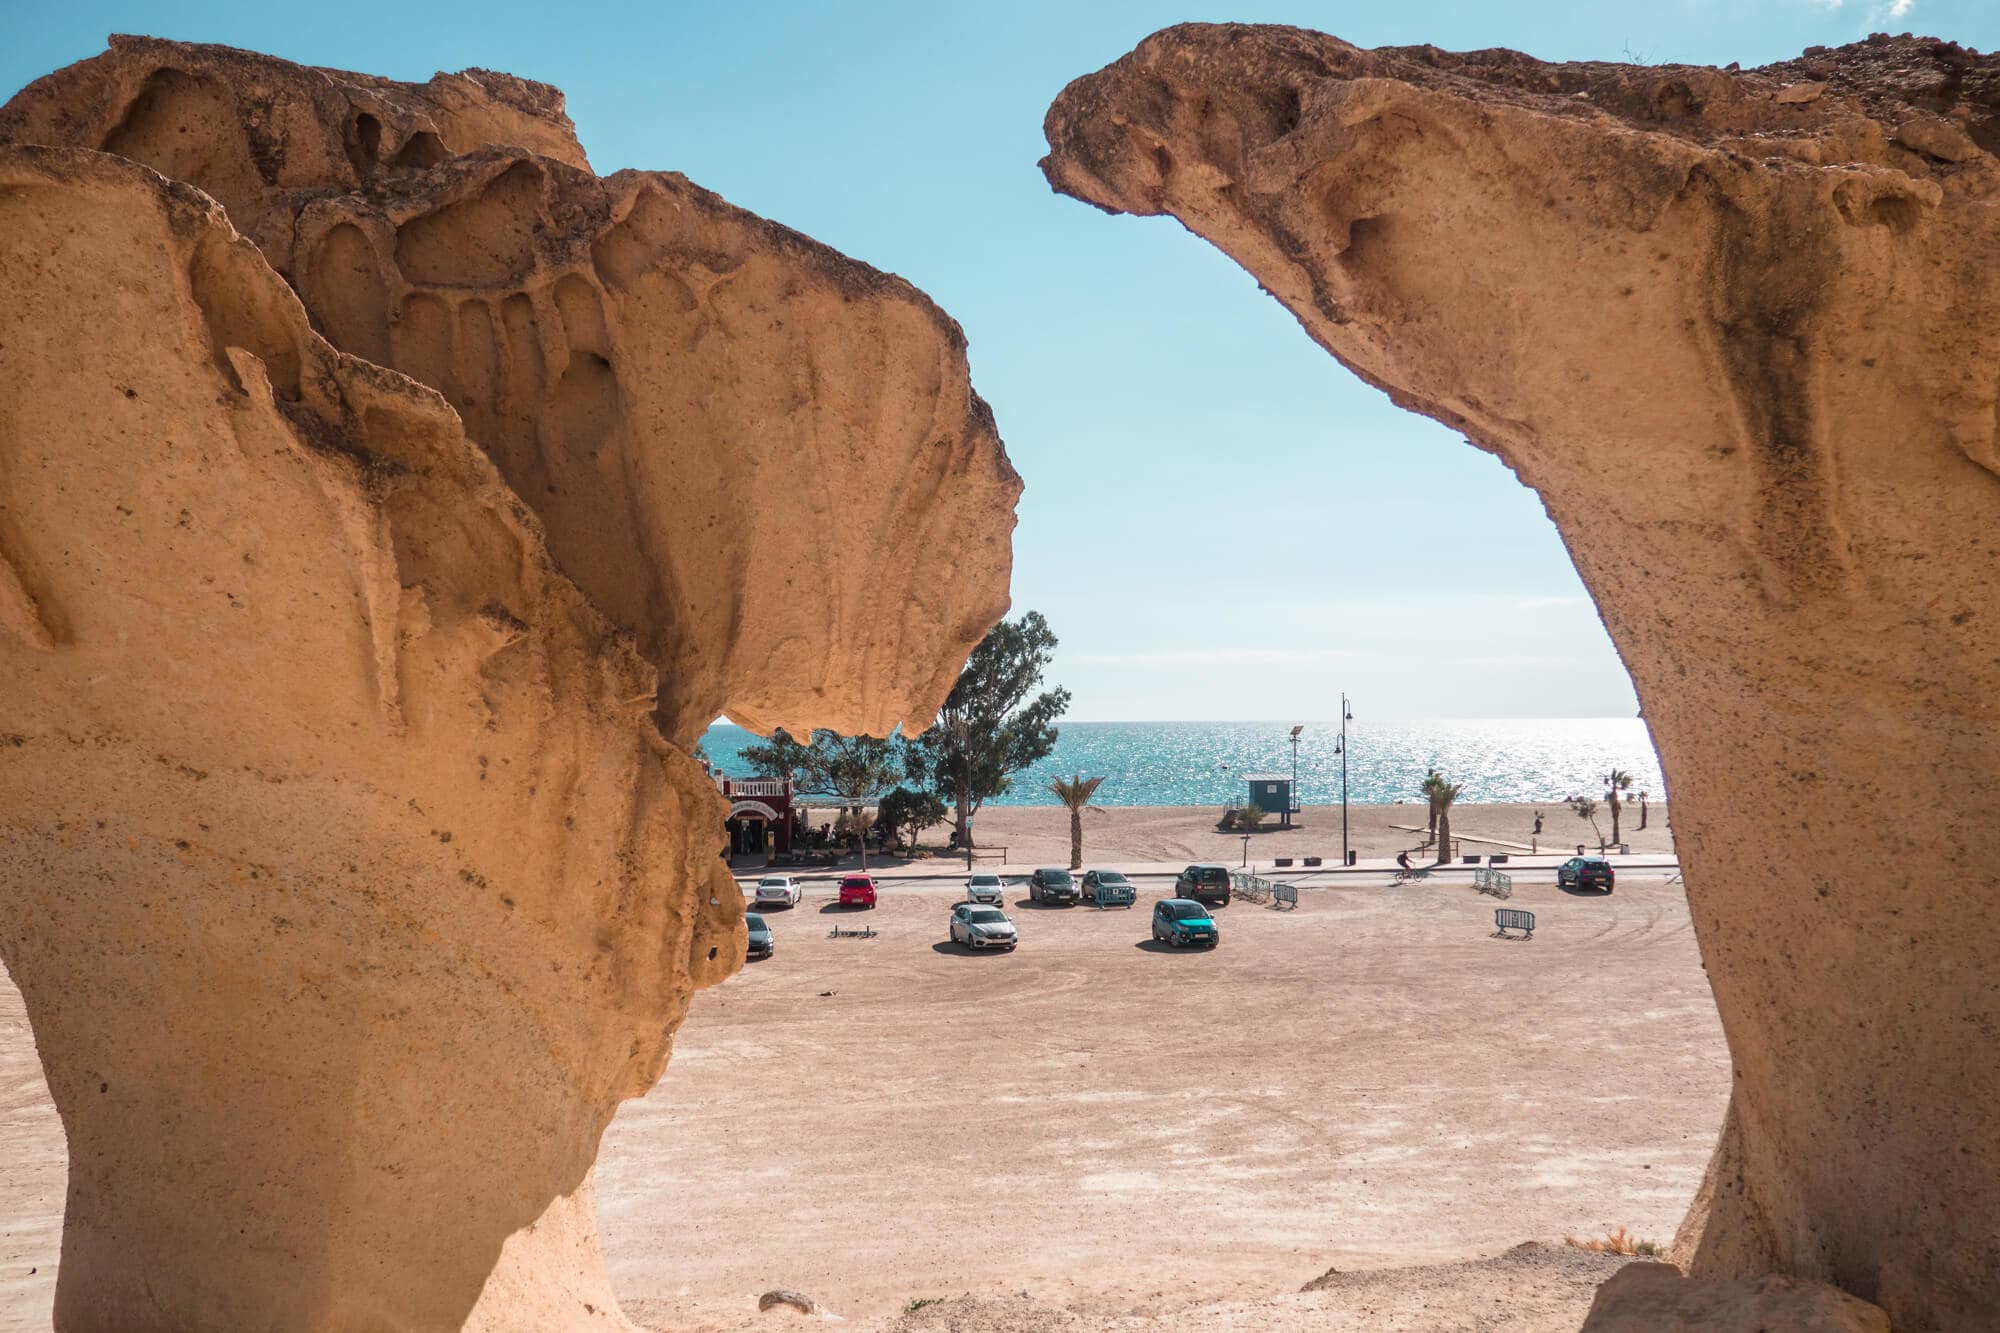 Las Gredas de Bolnuevo, also known as Ciudad Encantada - An otherworldly landscape of eroded sandstone formations in Bolnuevo, Murcia, Spain